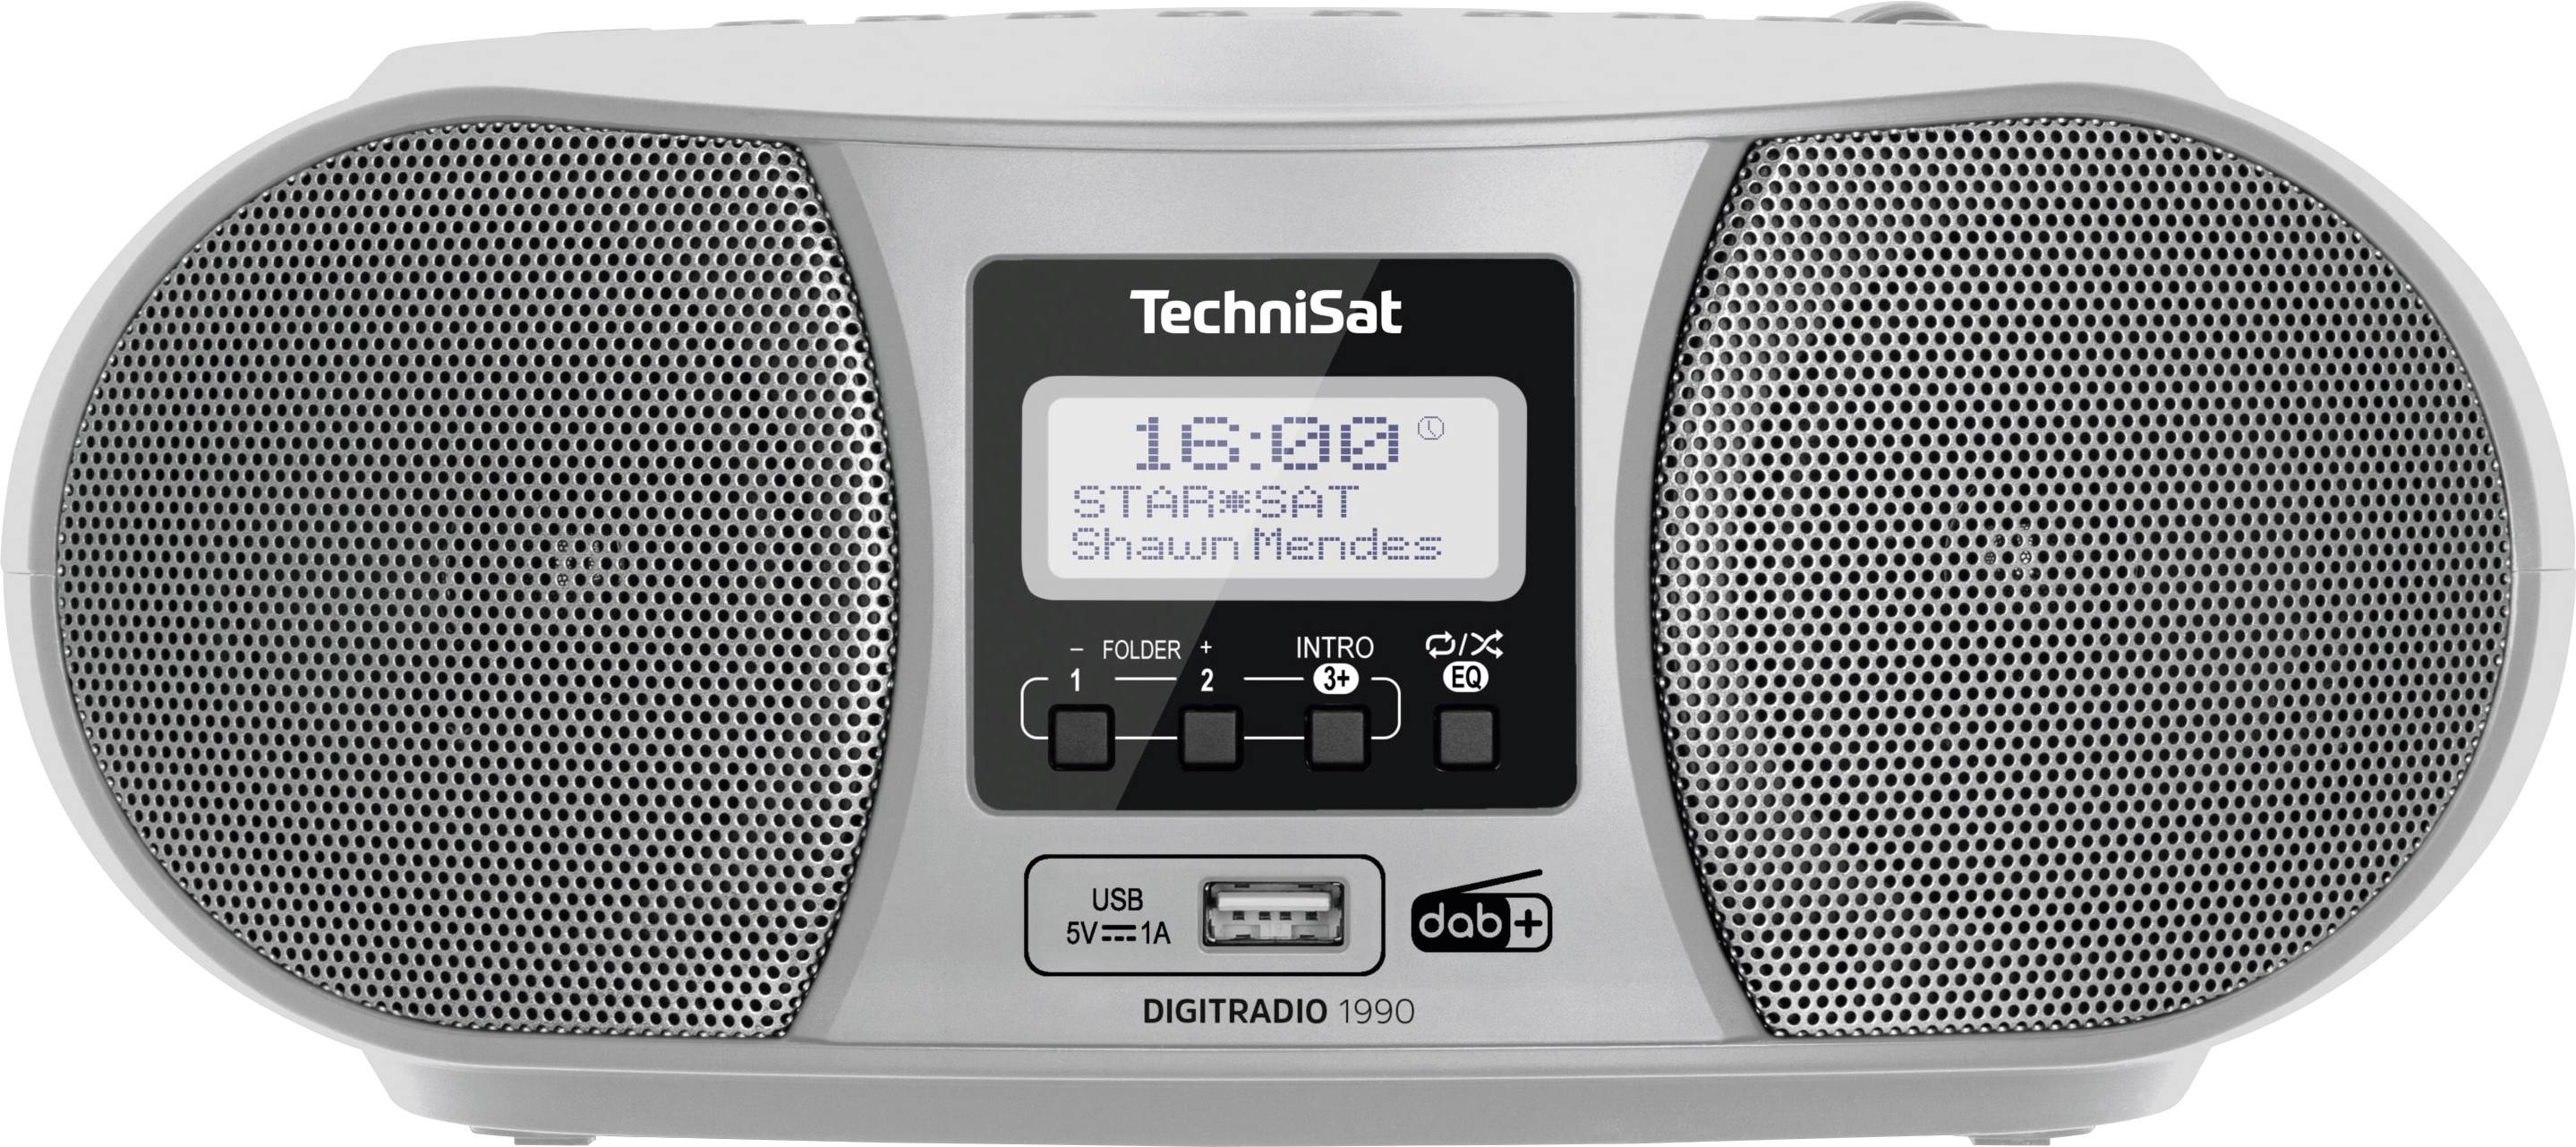 Buy TechniSat CD, Bluetooth, AUX, Silver Alarm Radio 1990 | DIGITRADIO Conrad CD clock DAB+, Electronic charger, FM USB Battery player